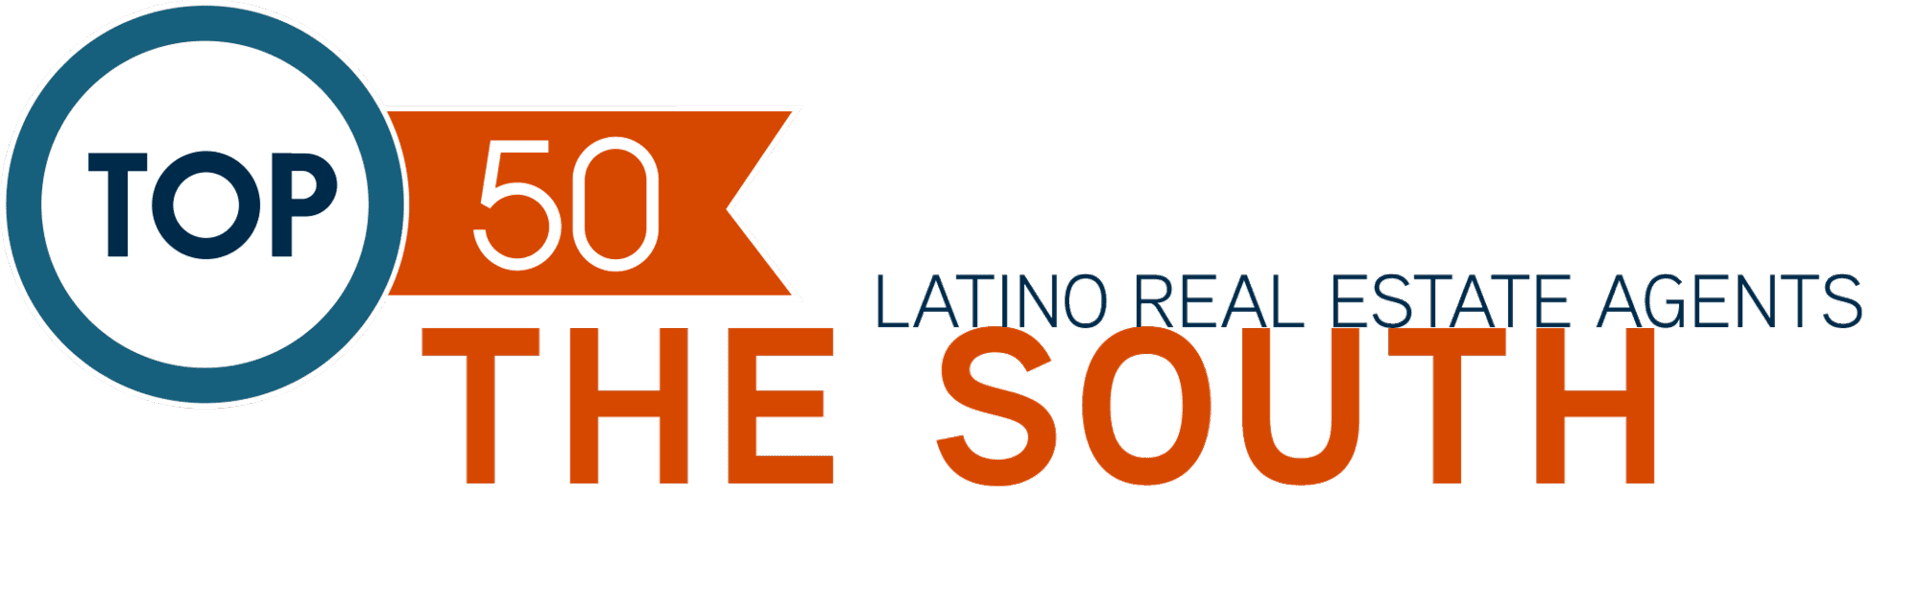 Top 50 latino real estate agents logo